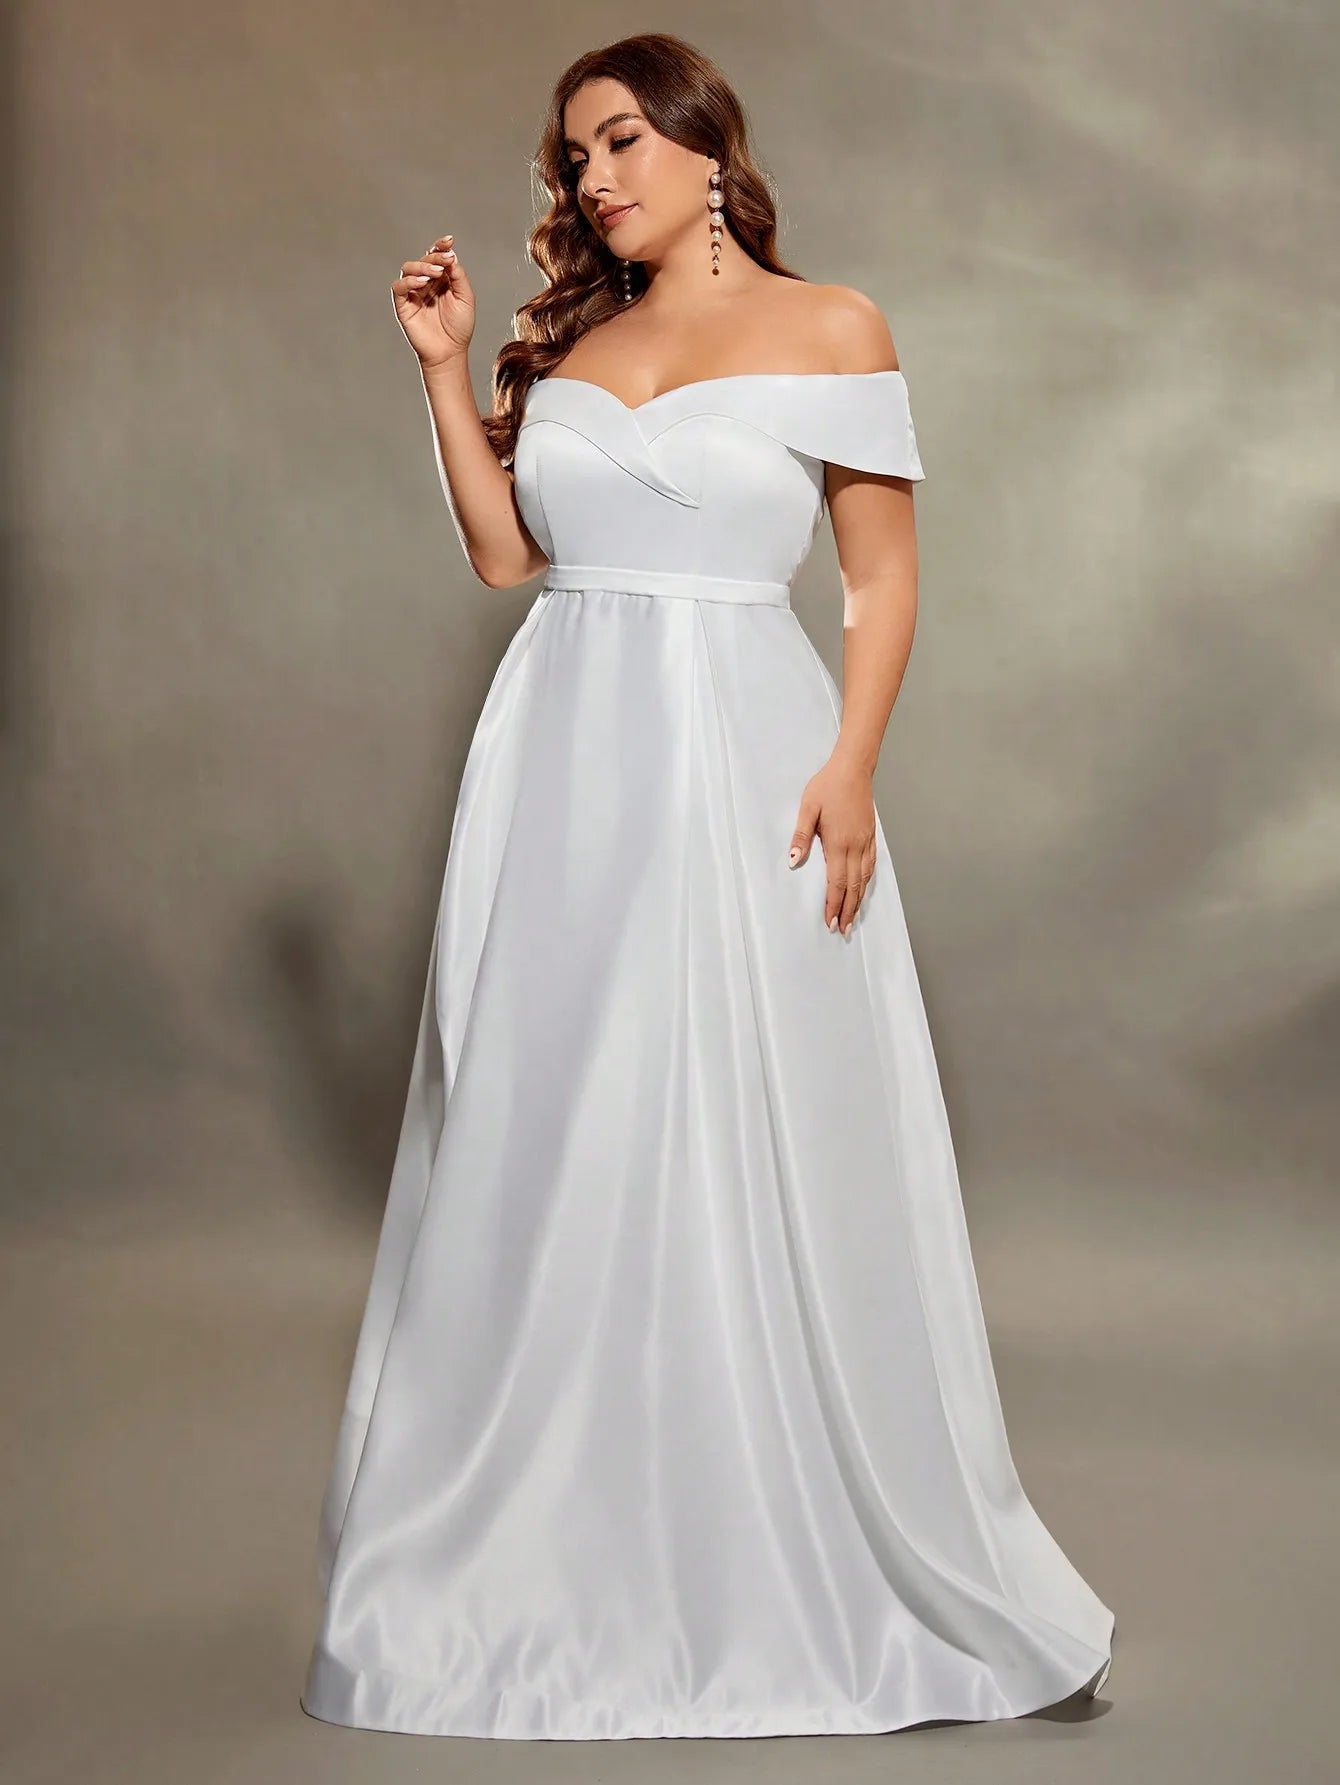 Mgiacy plus size Line neck irregular cross satin wedding gown full skirt Evening gown ball dress Party dress Bridesmaid dress